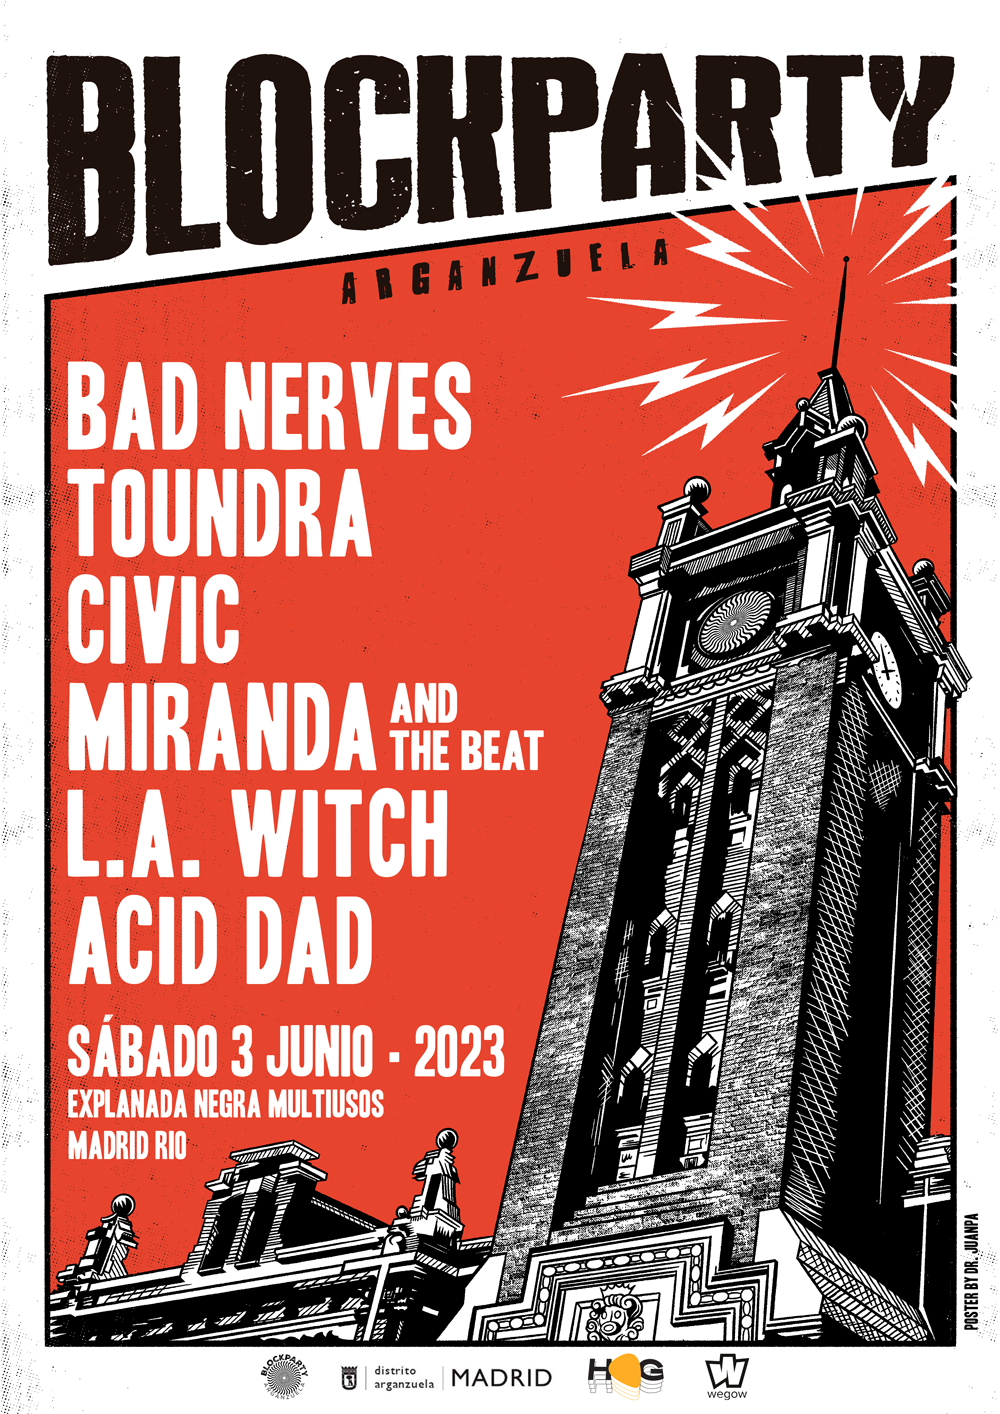 Block Party 2023 - Madrid - CIVIC y Bad Nerves Blockparty-arganzuela-2023-1677064069.8490853